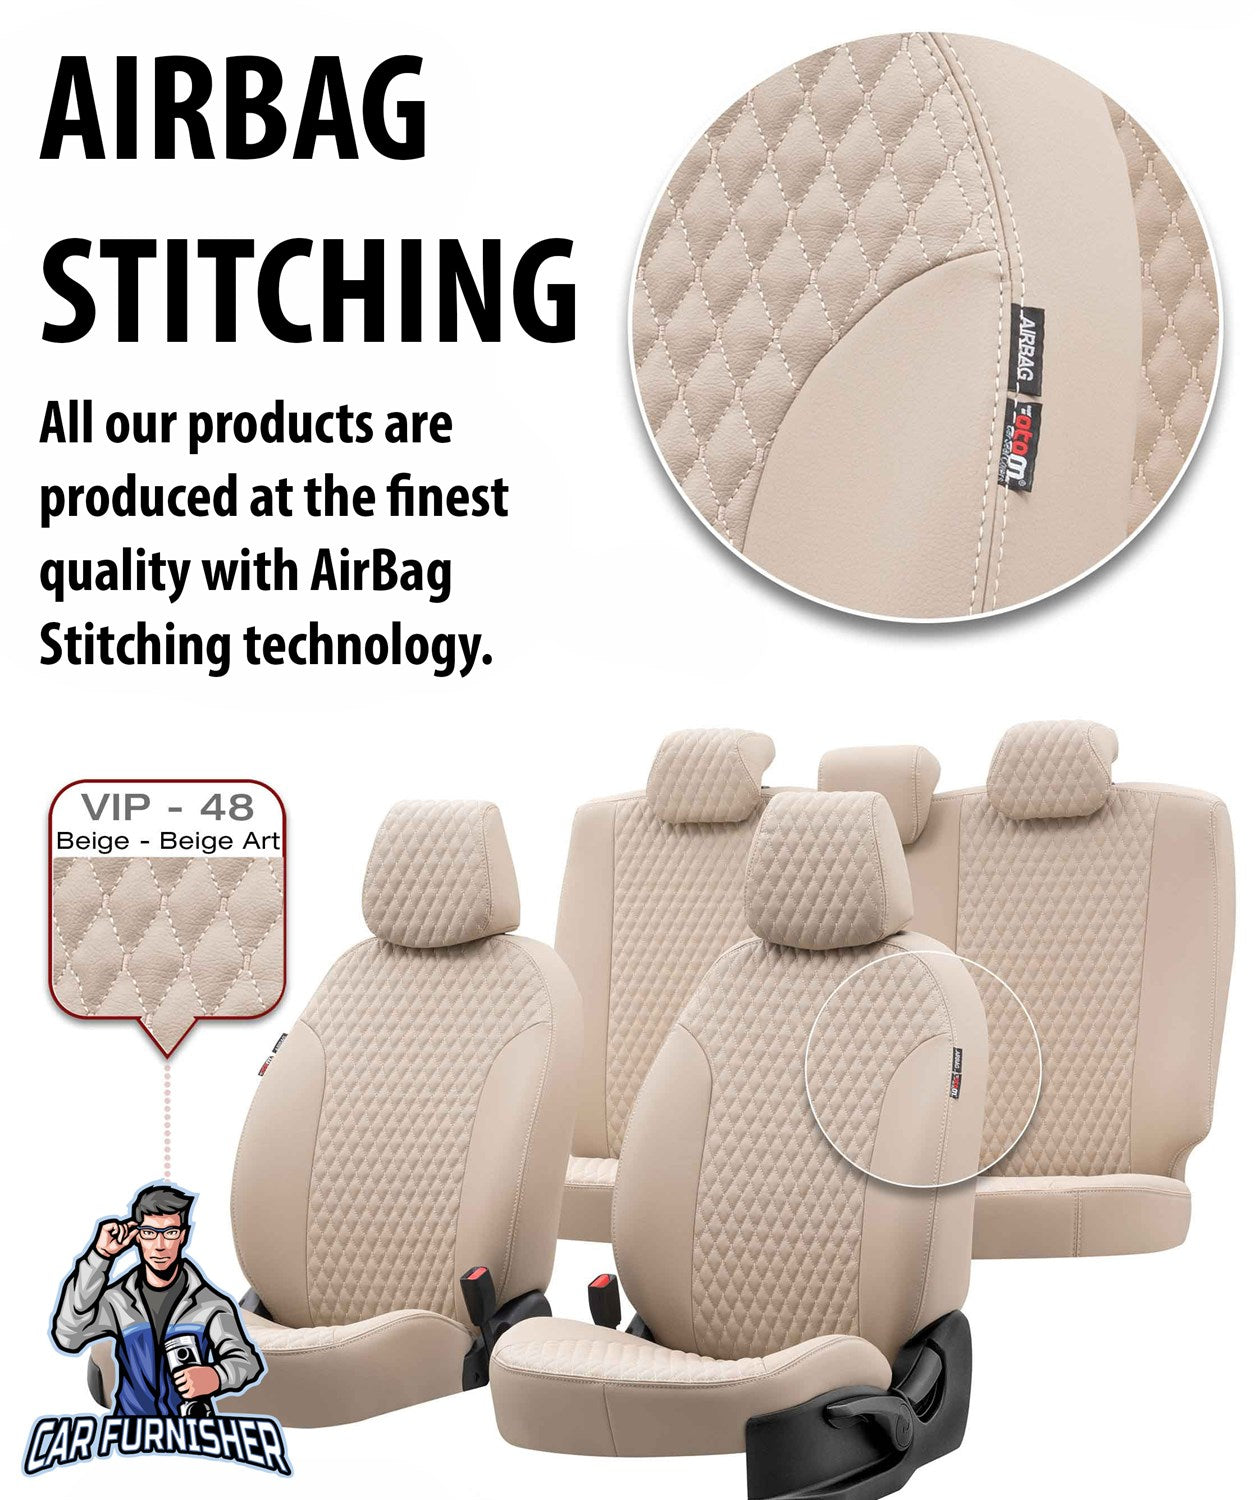 Fiat Brava Seat Covers Amsterdam Leather Design Beige Leather